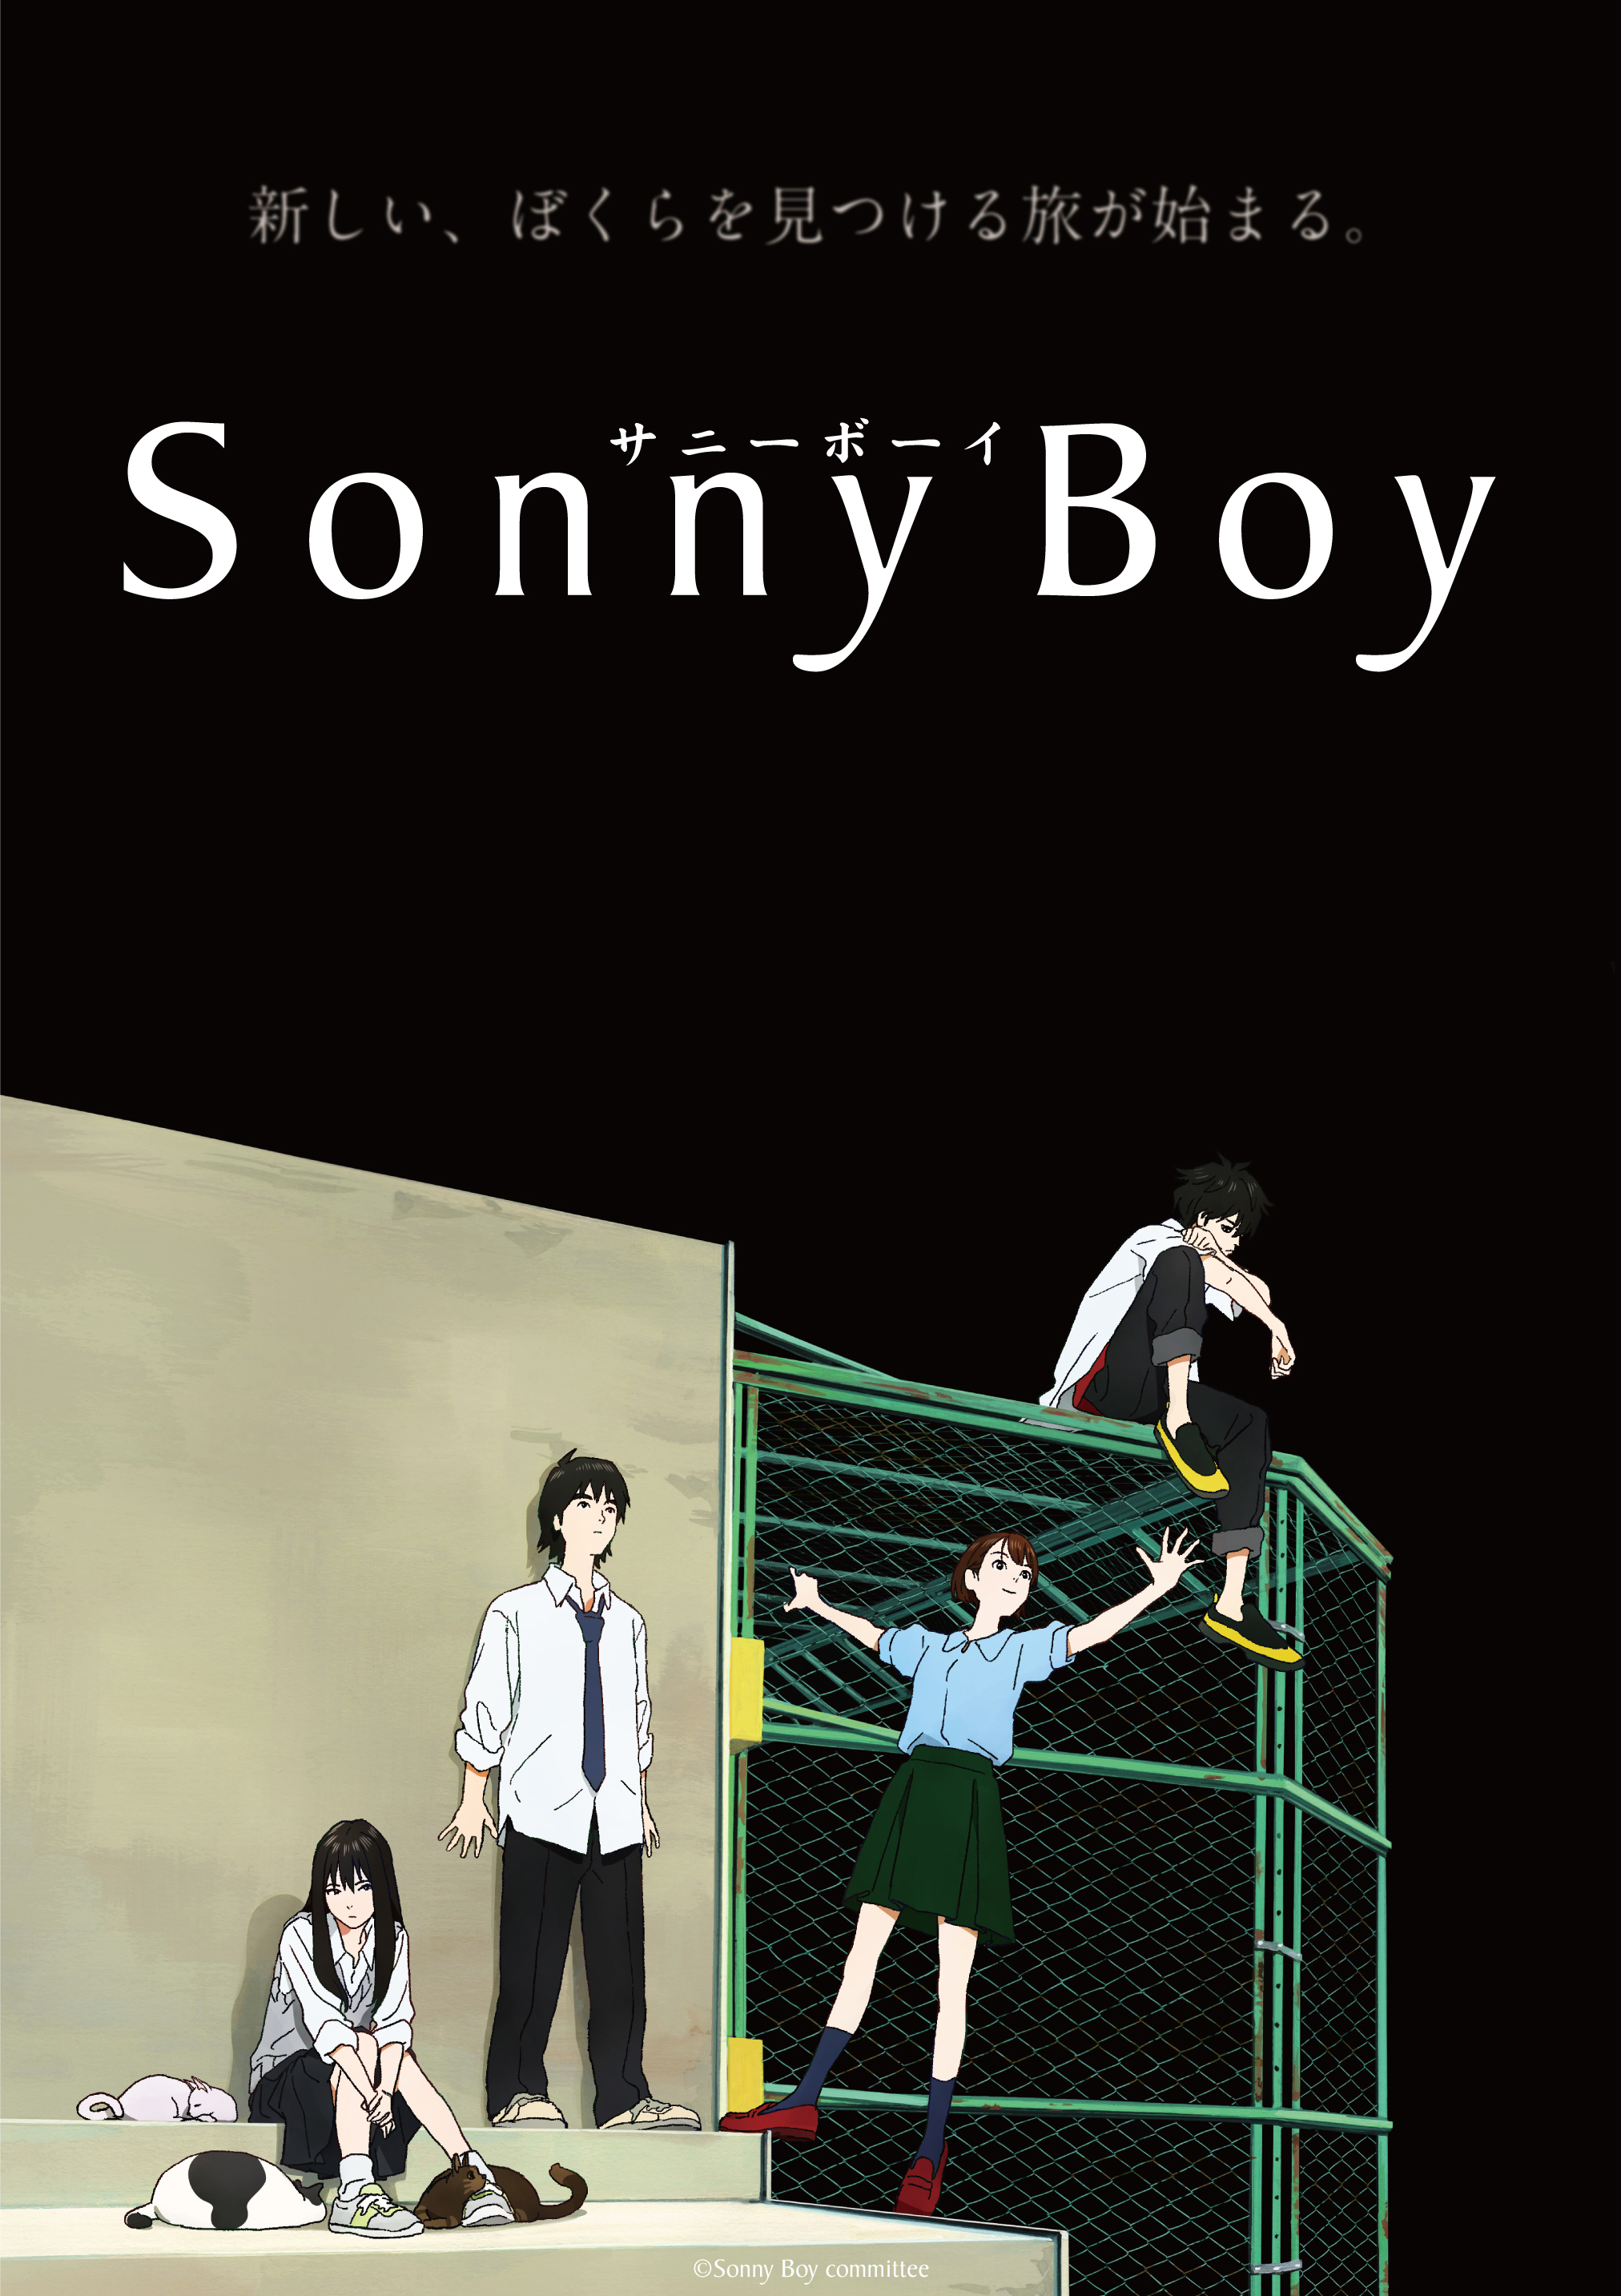 TVアニメ『Sonny Boy』